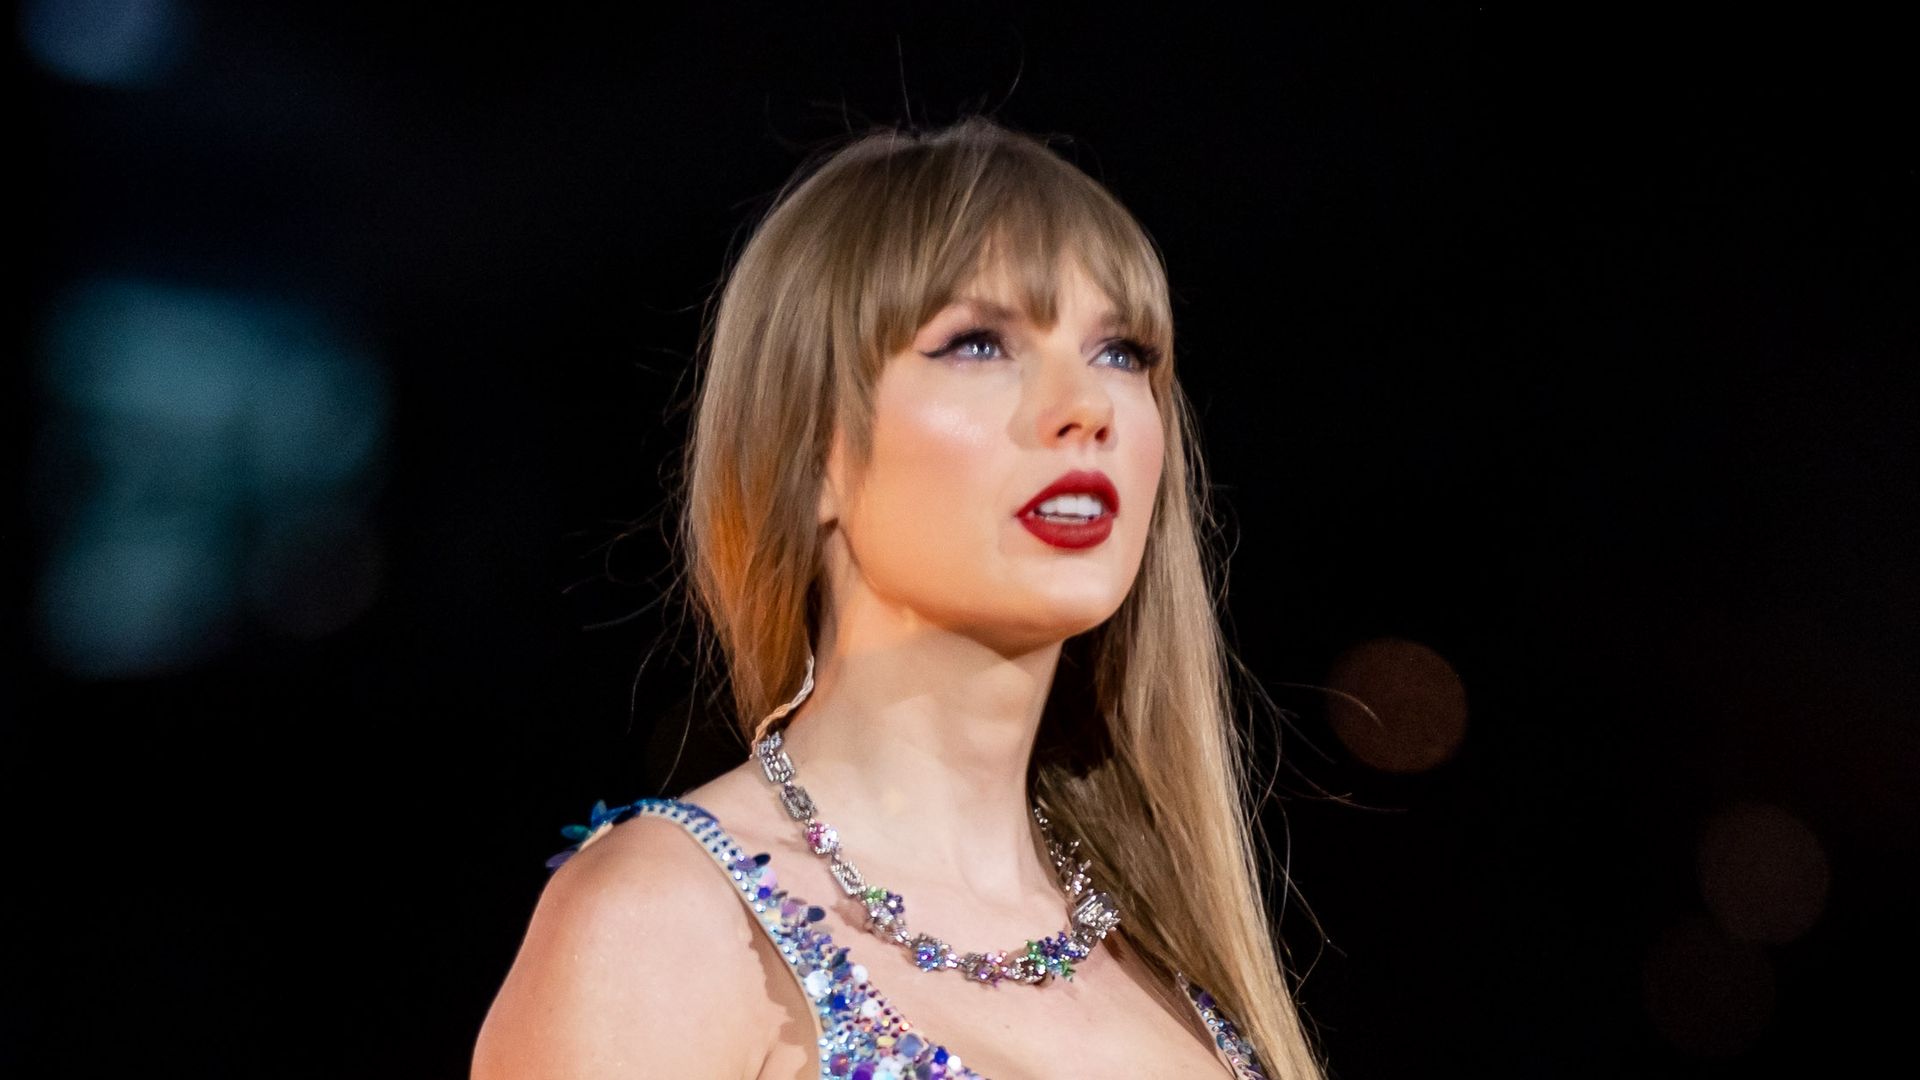 Taylor Swift: Speak Now (Taylor's Version) Album Review